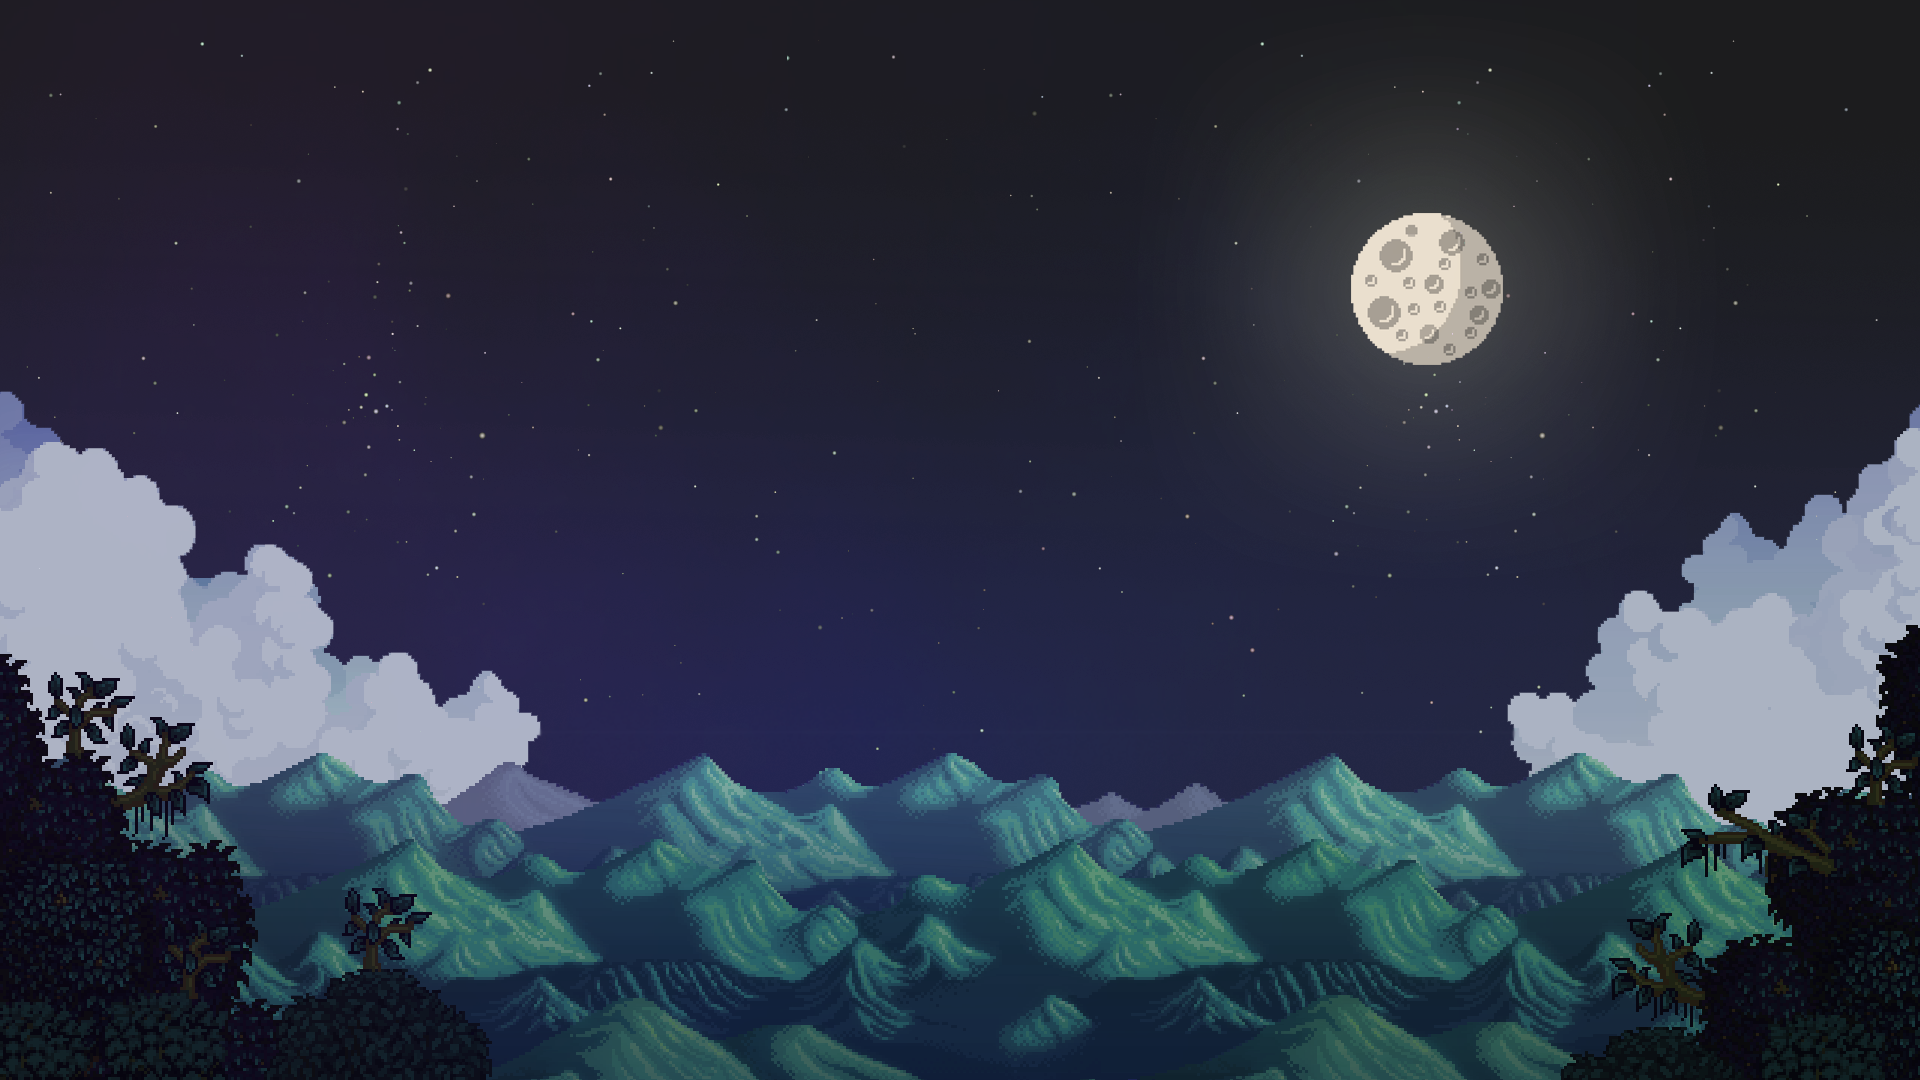 Stardew Valley Moon Landscape Pixel Art 1920x1080